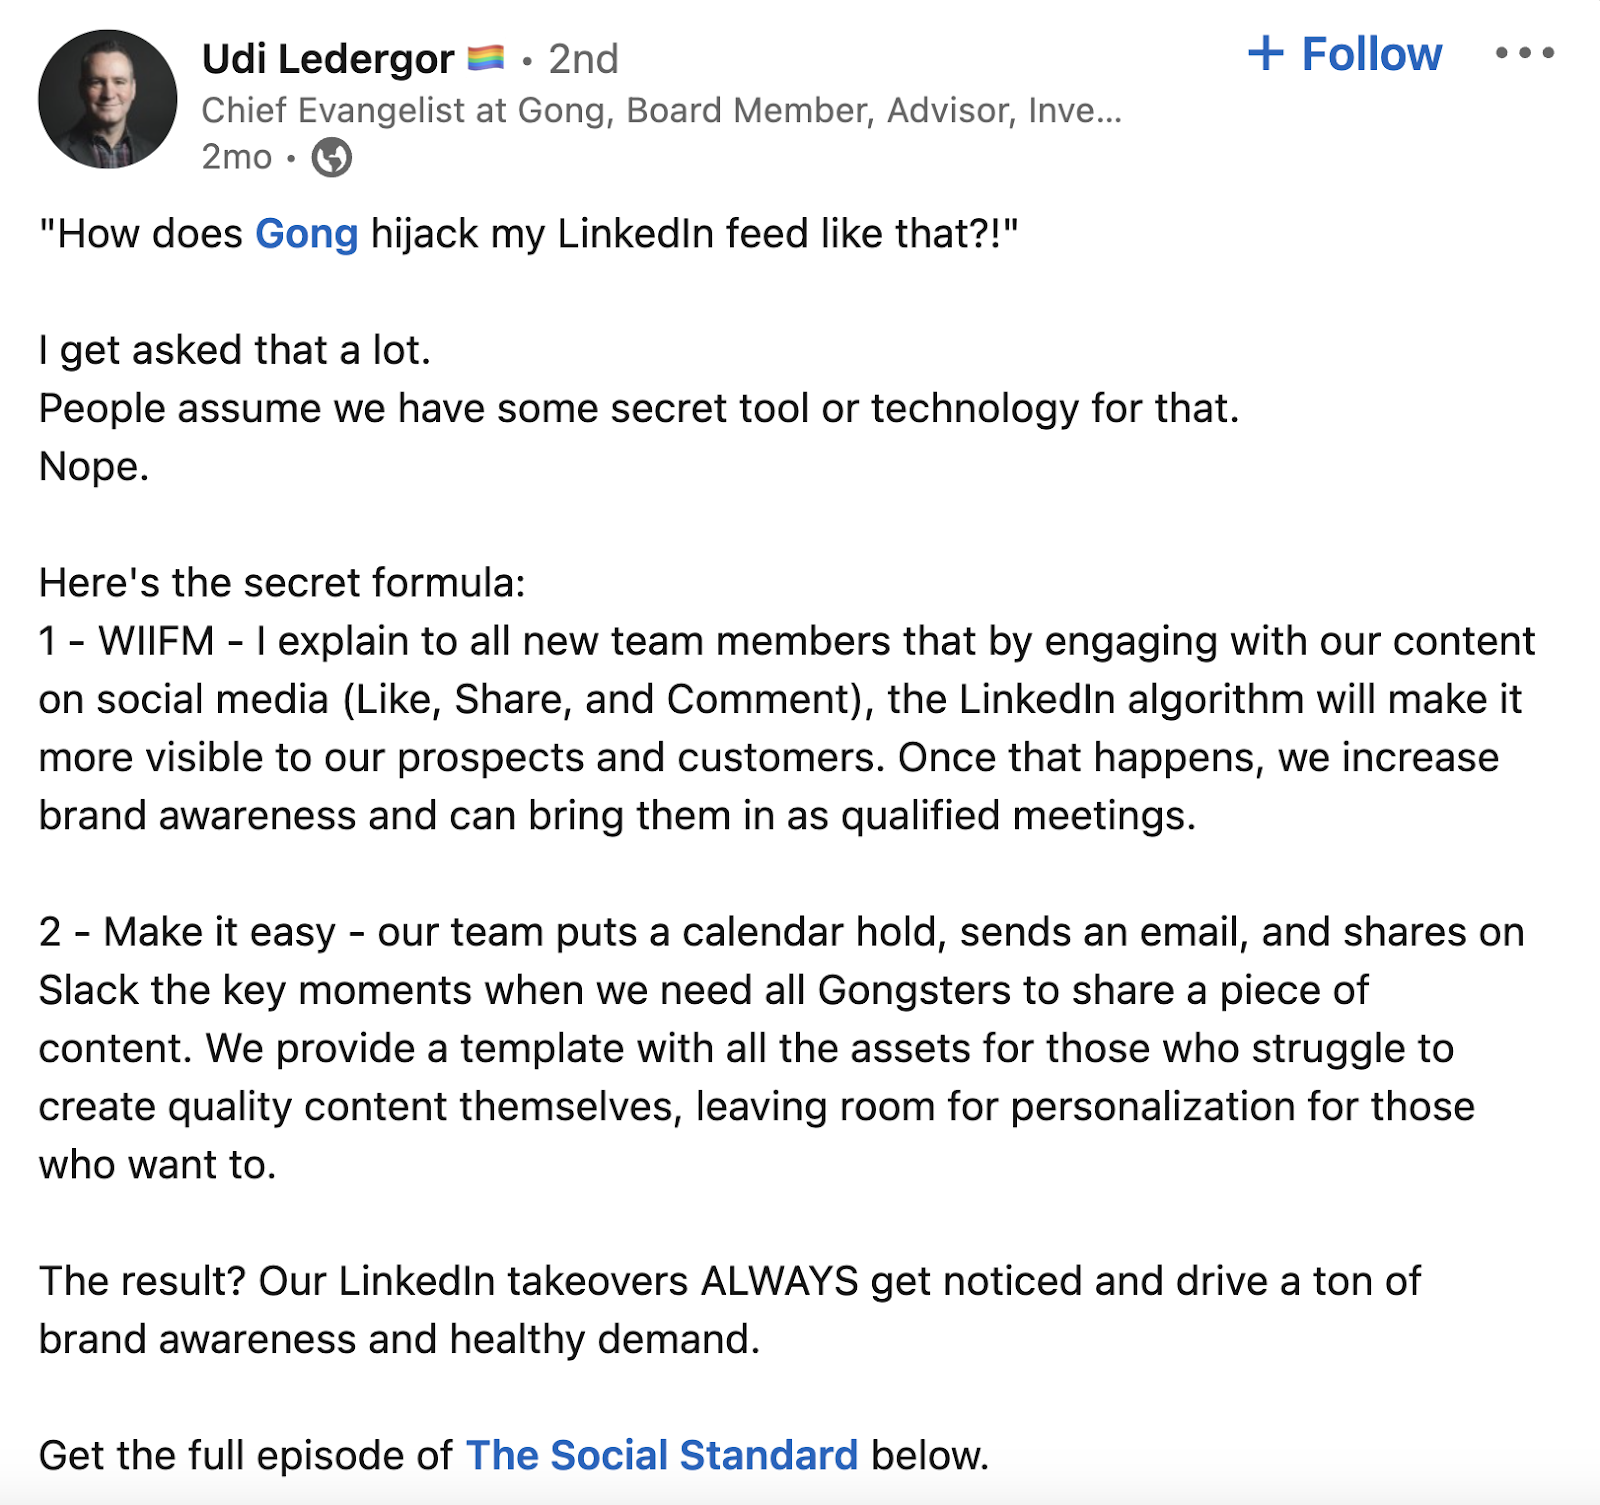 Udi Ledergor's LinkedIn post explaining the importance of employee engagement